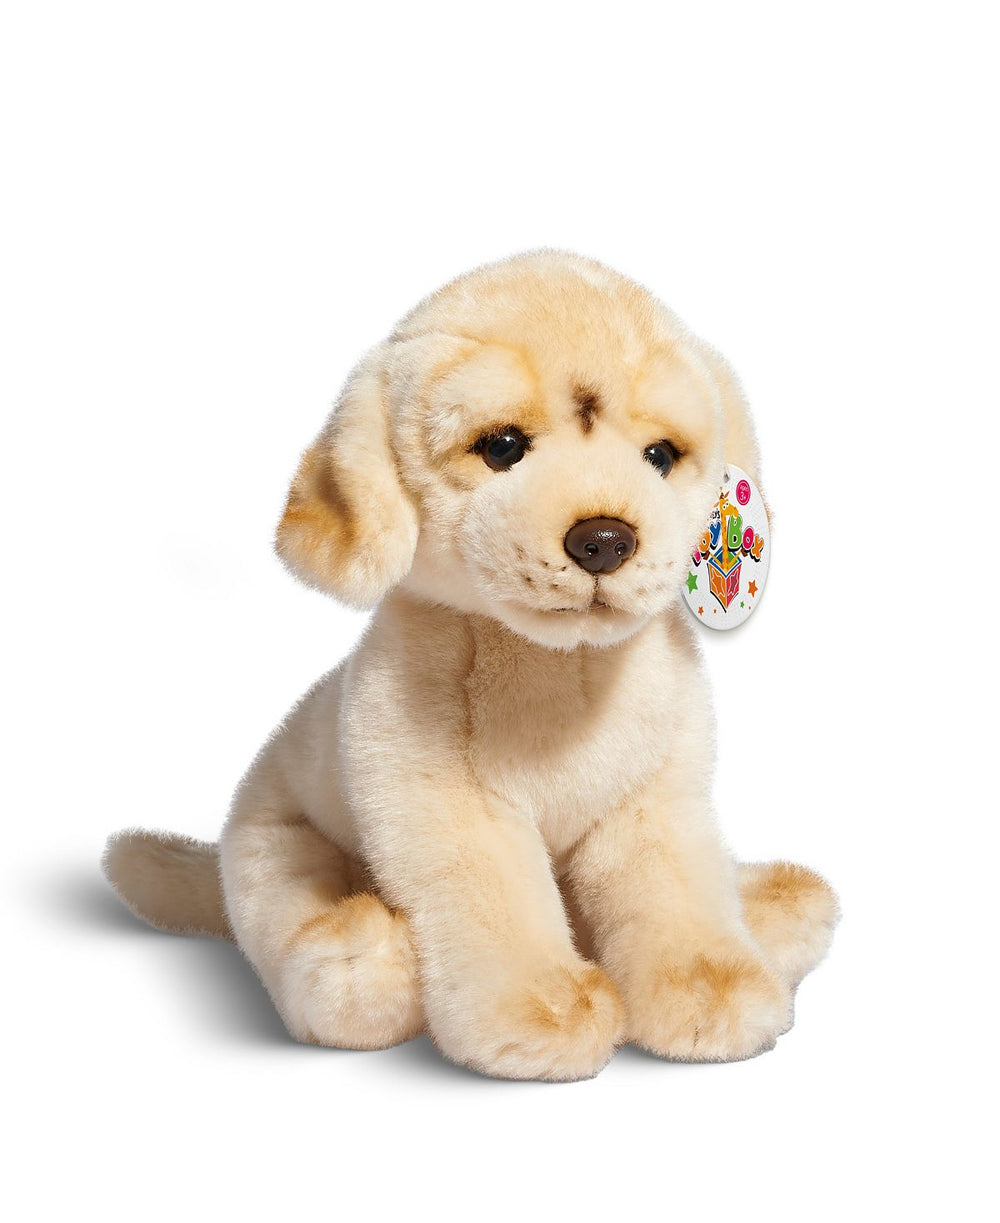 Geoffrey's Toy Box 10 inch Plush Golden Labrador Puppy - Exclusive at Macy's